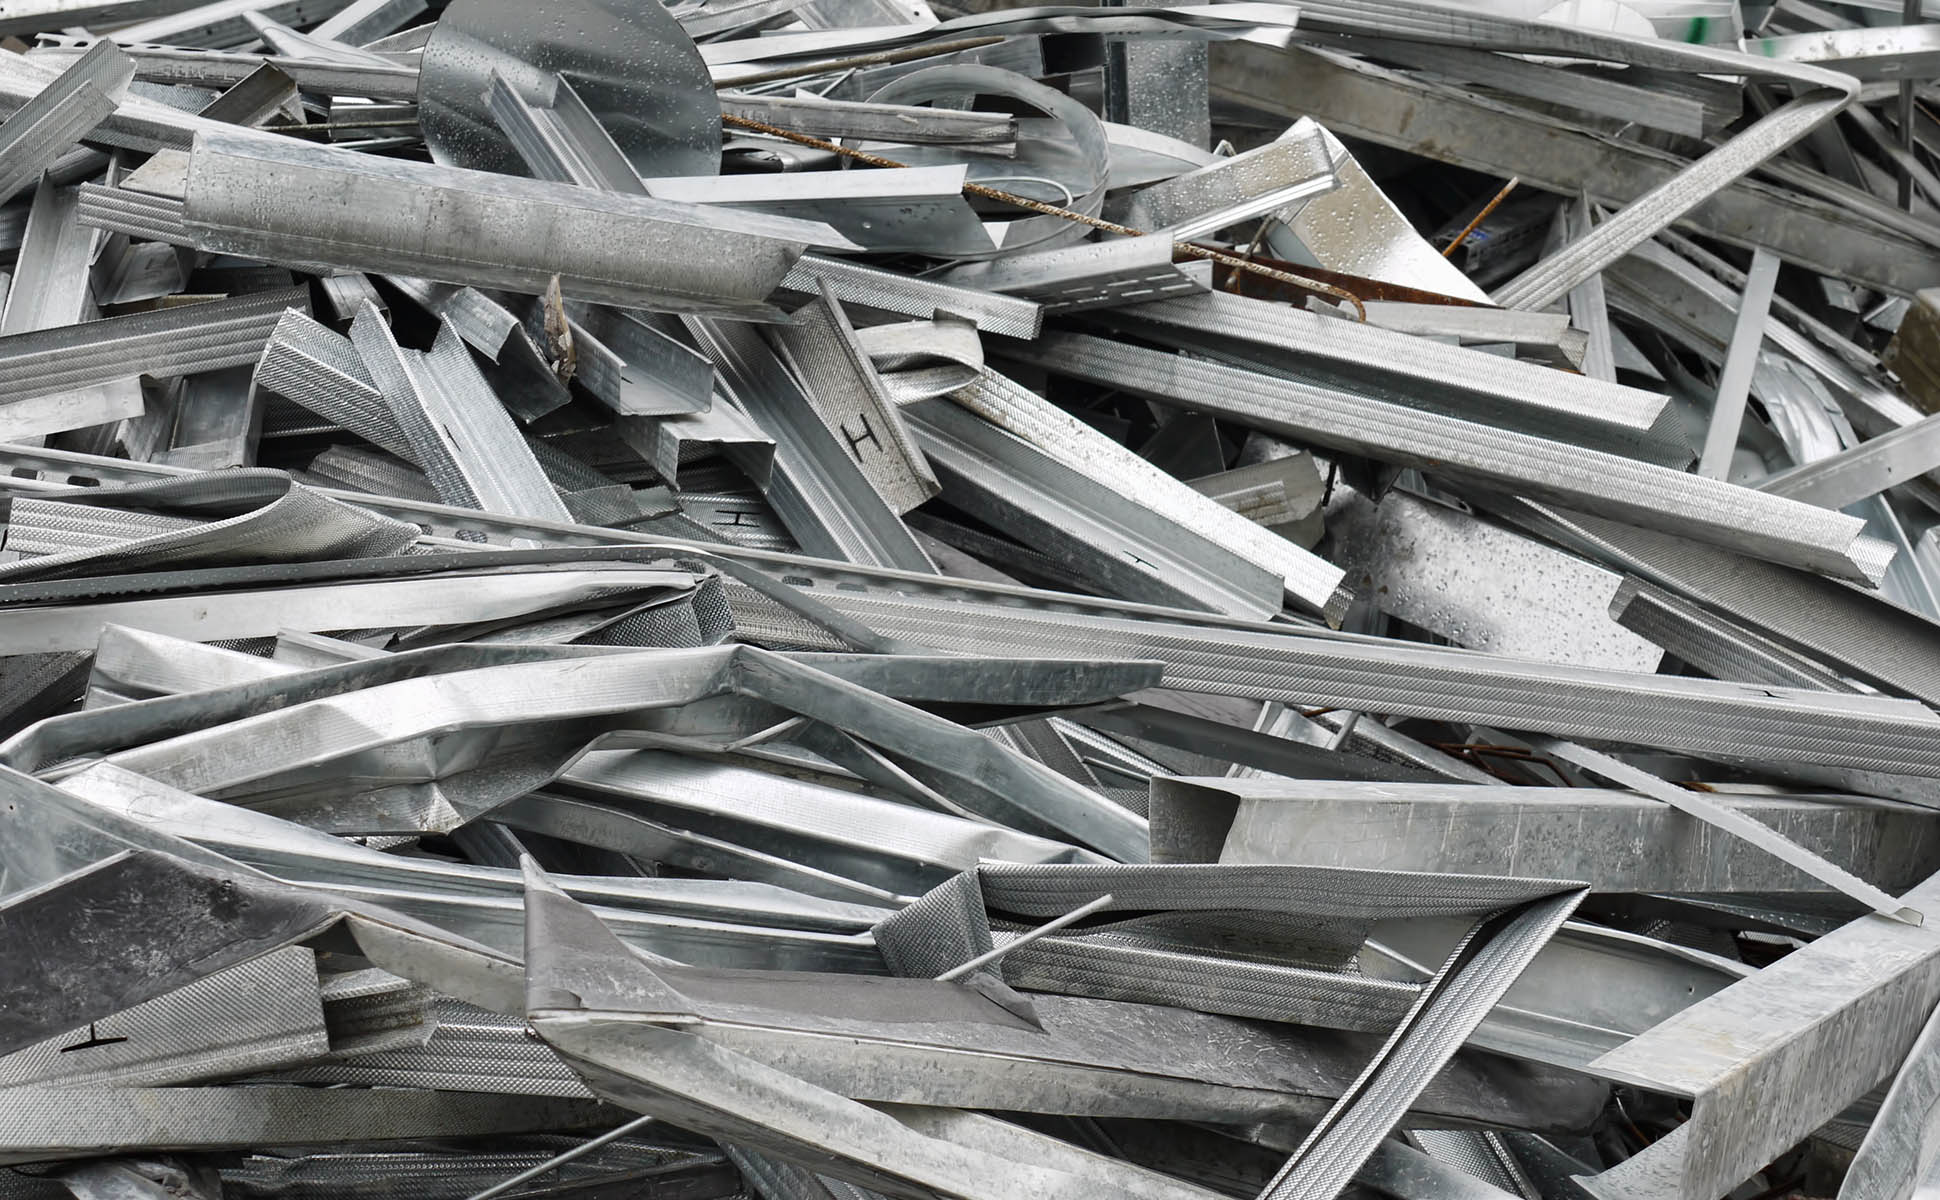 Aluminum scrap metal